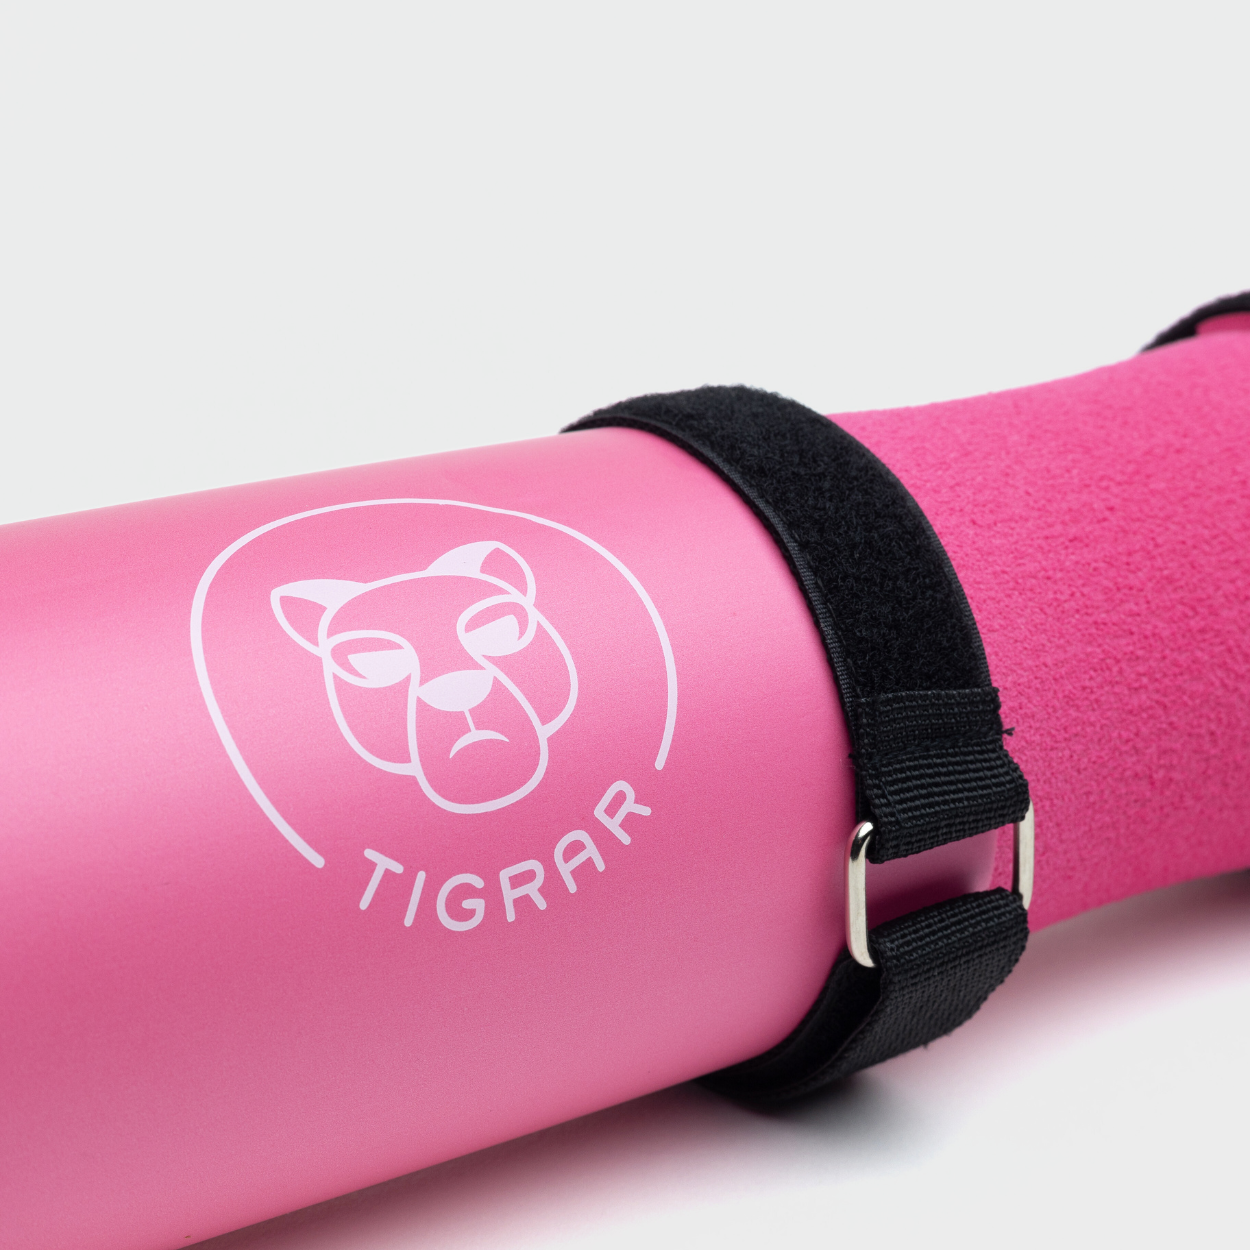 Close-up van roze Tigrar gym barbell pad, voegt een vleugje kleur toe aan trainingssessies.